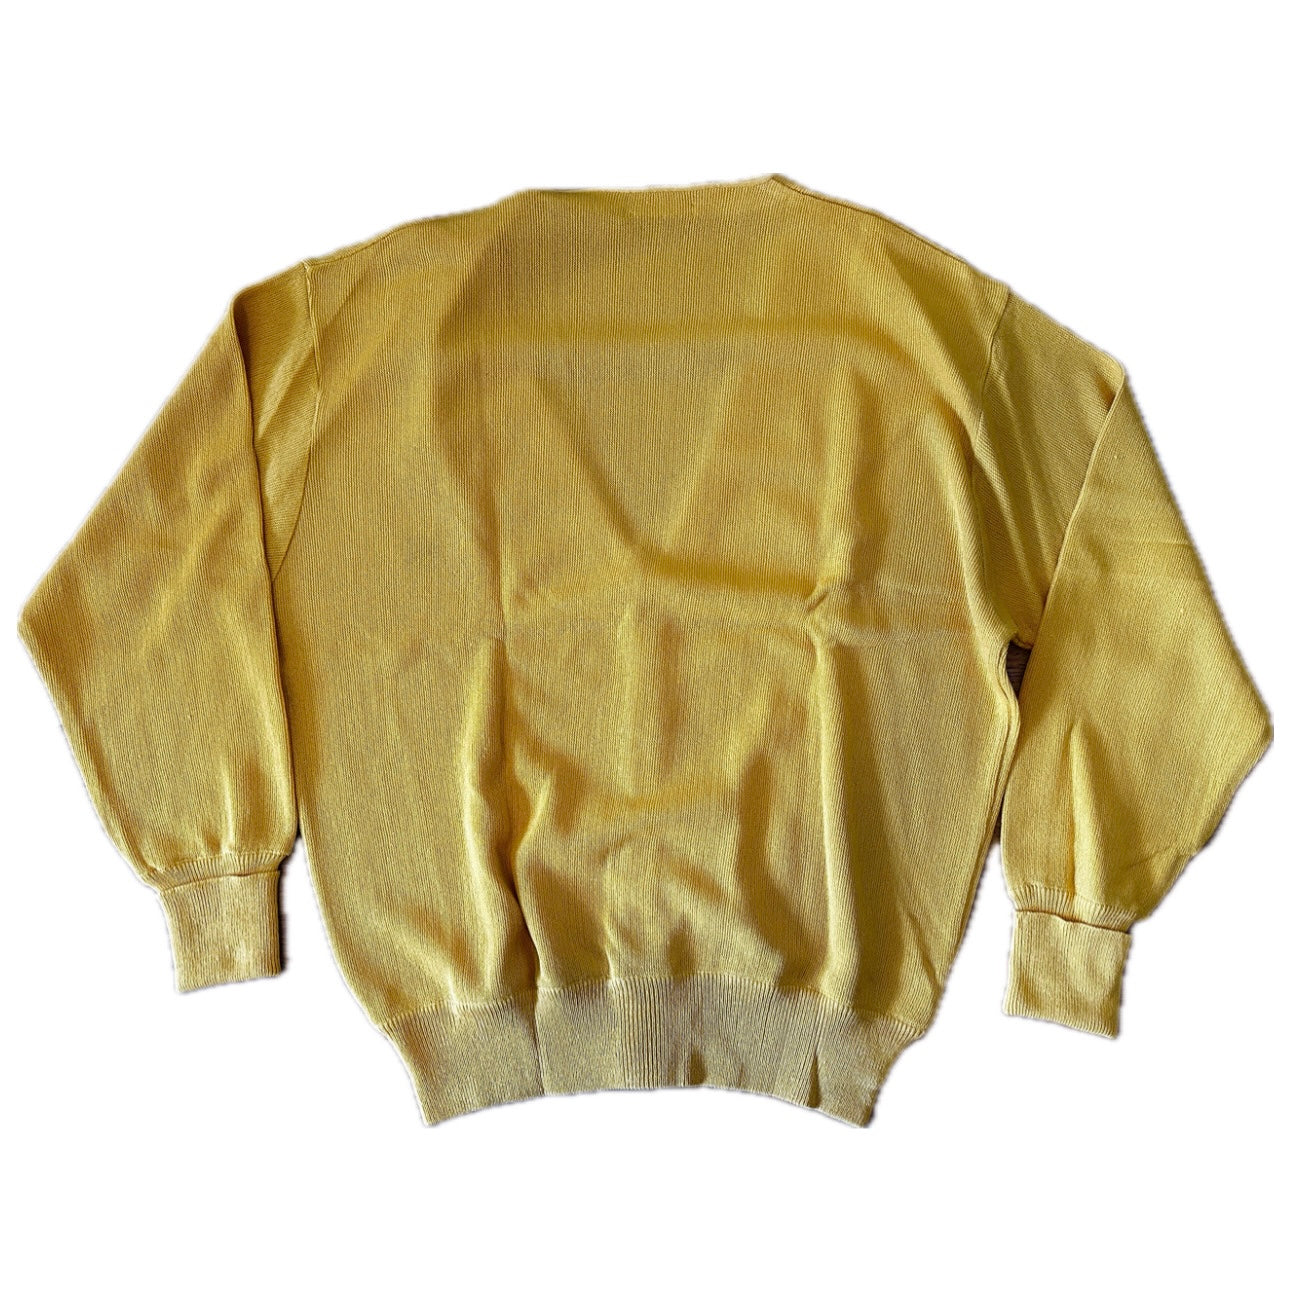 Burberrys Vintage 80s Cardigan Yellow - Deadstock - 8 / XXL - Made in Spain